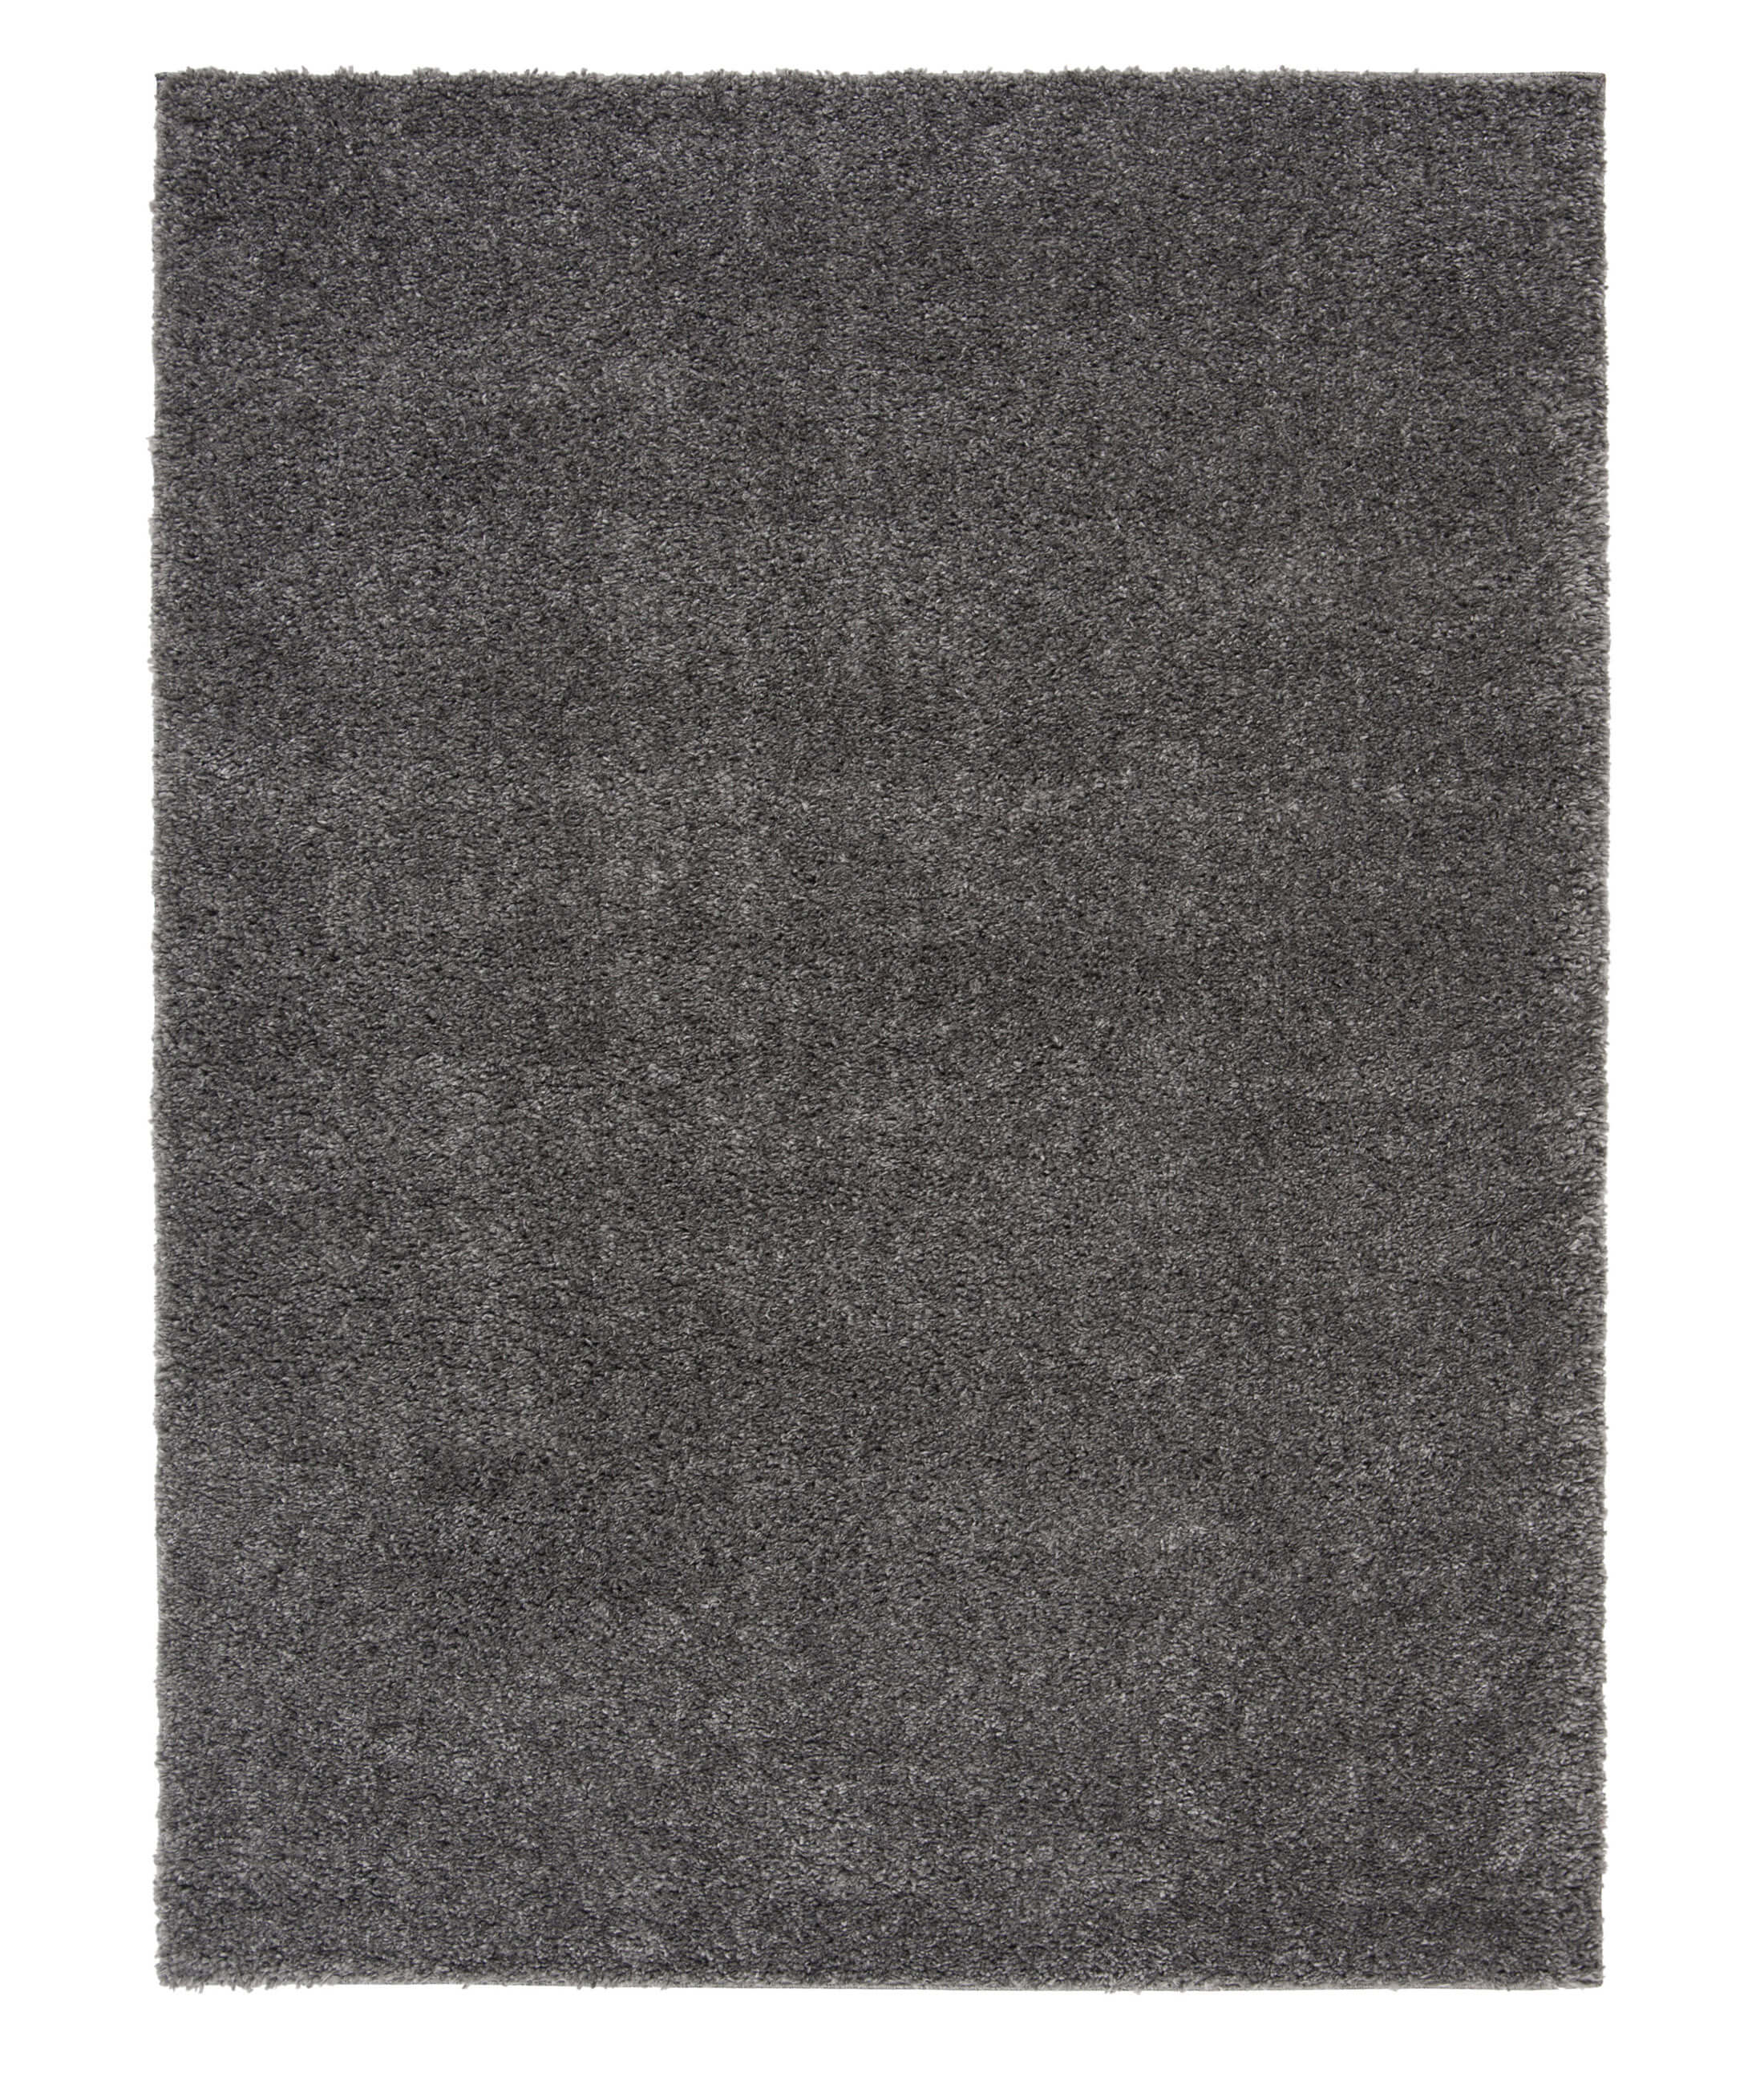 Pufyy Anthracite Carpet 76714A